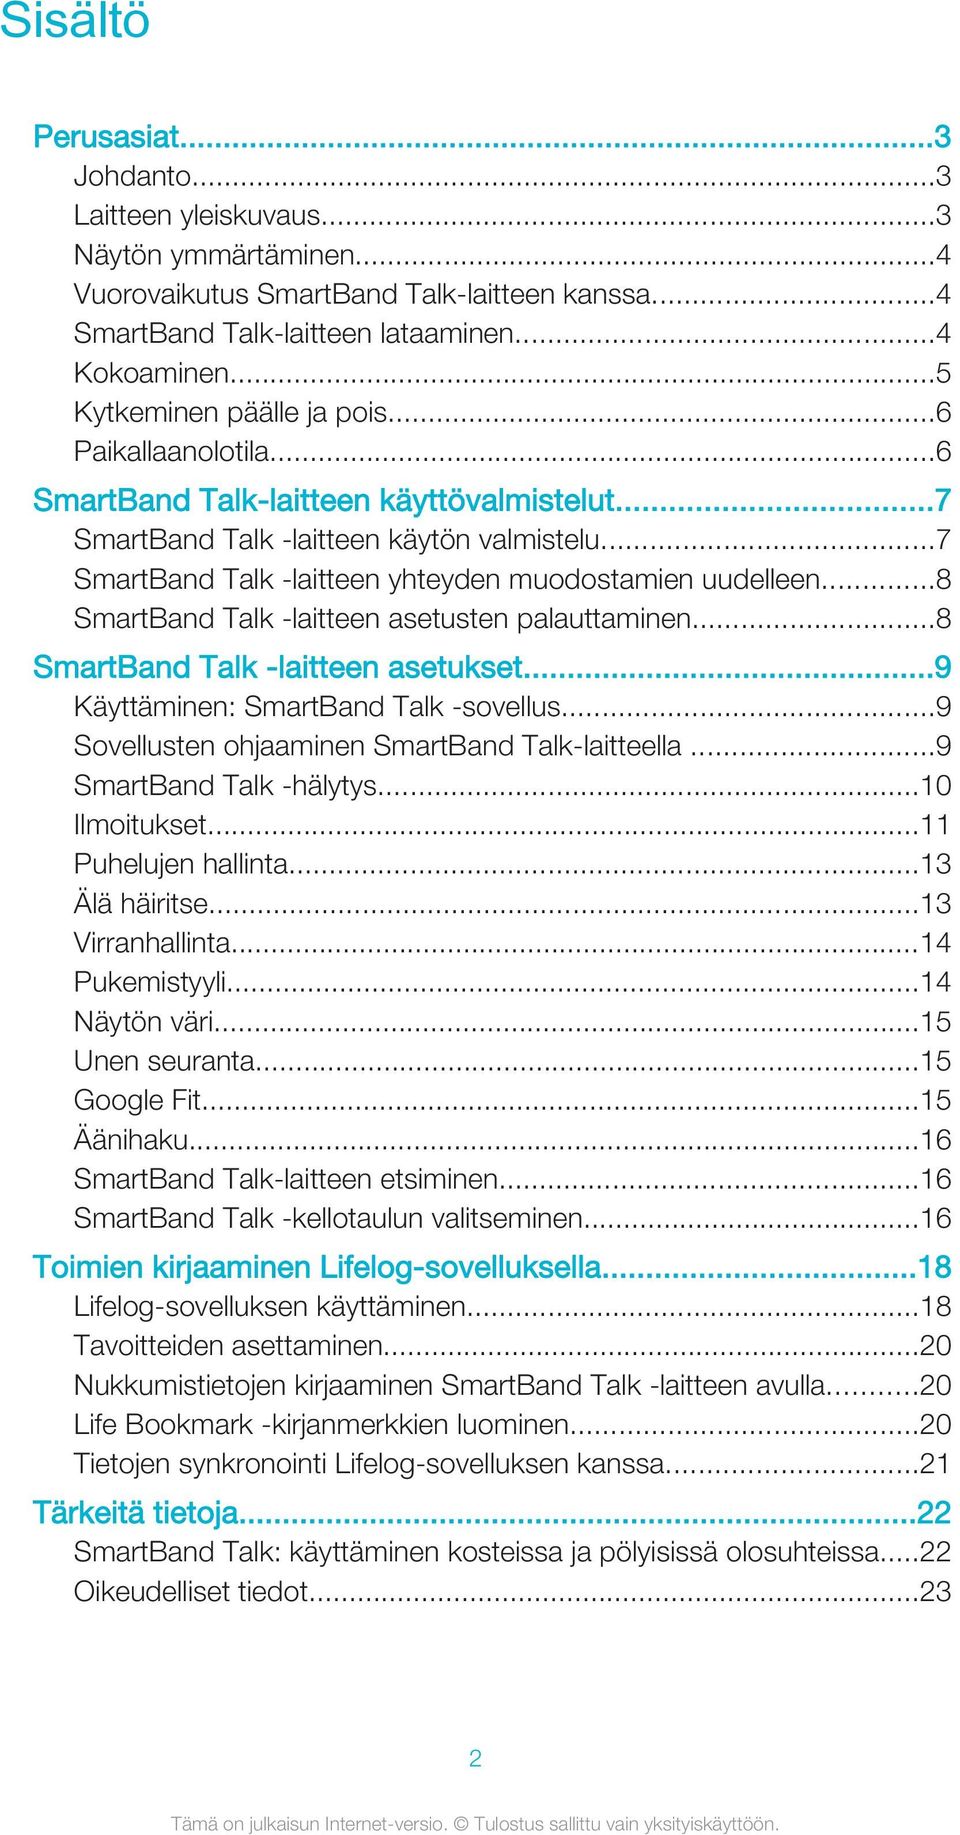 ..7 SmartBand Talk -laitteen yhteyden muodostamien uudelleen...8 SmartBand Talk -laitteen asetusten palauttaminen...8 SmartBand Talk -laitteen asetukset...9 Käyttäminen: SmartBand Talk -sovellus.